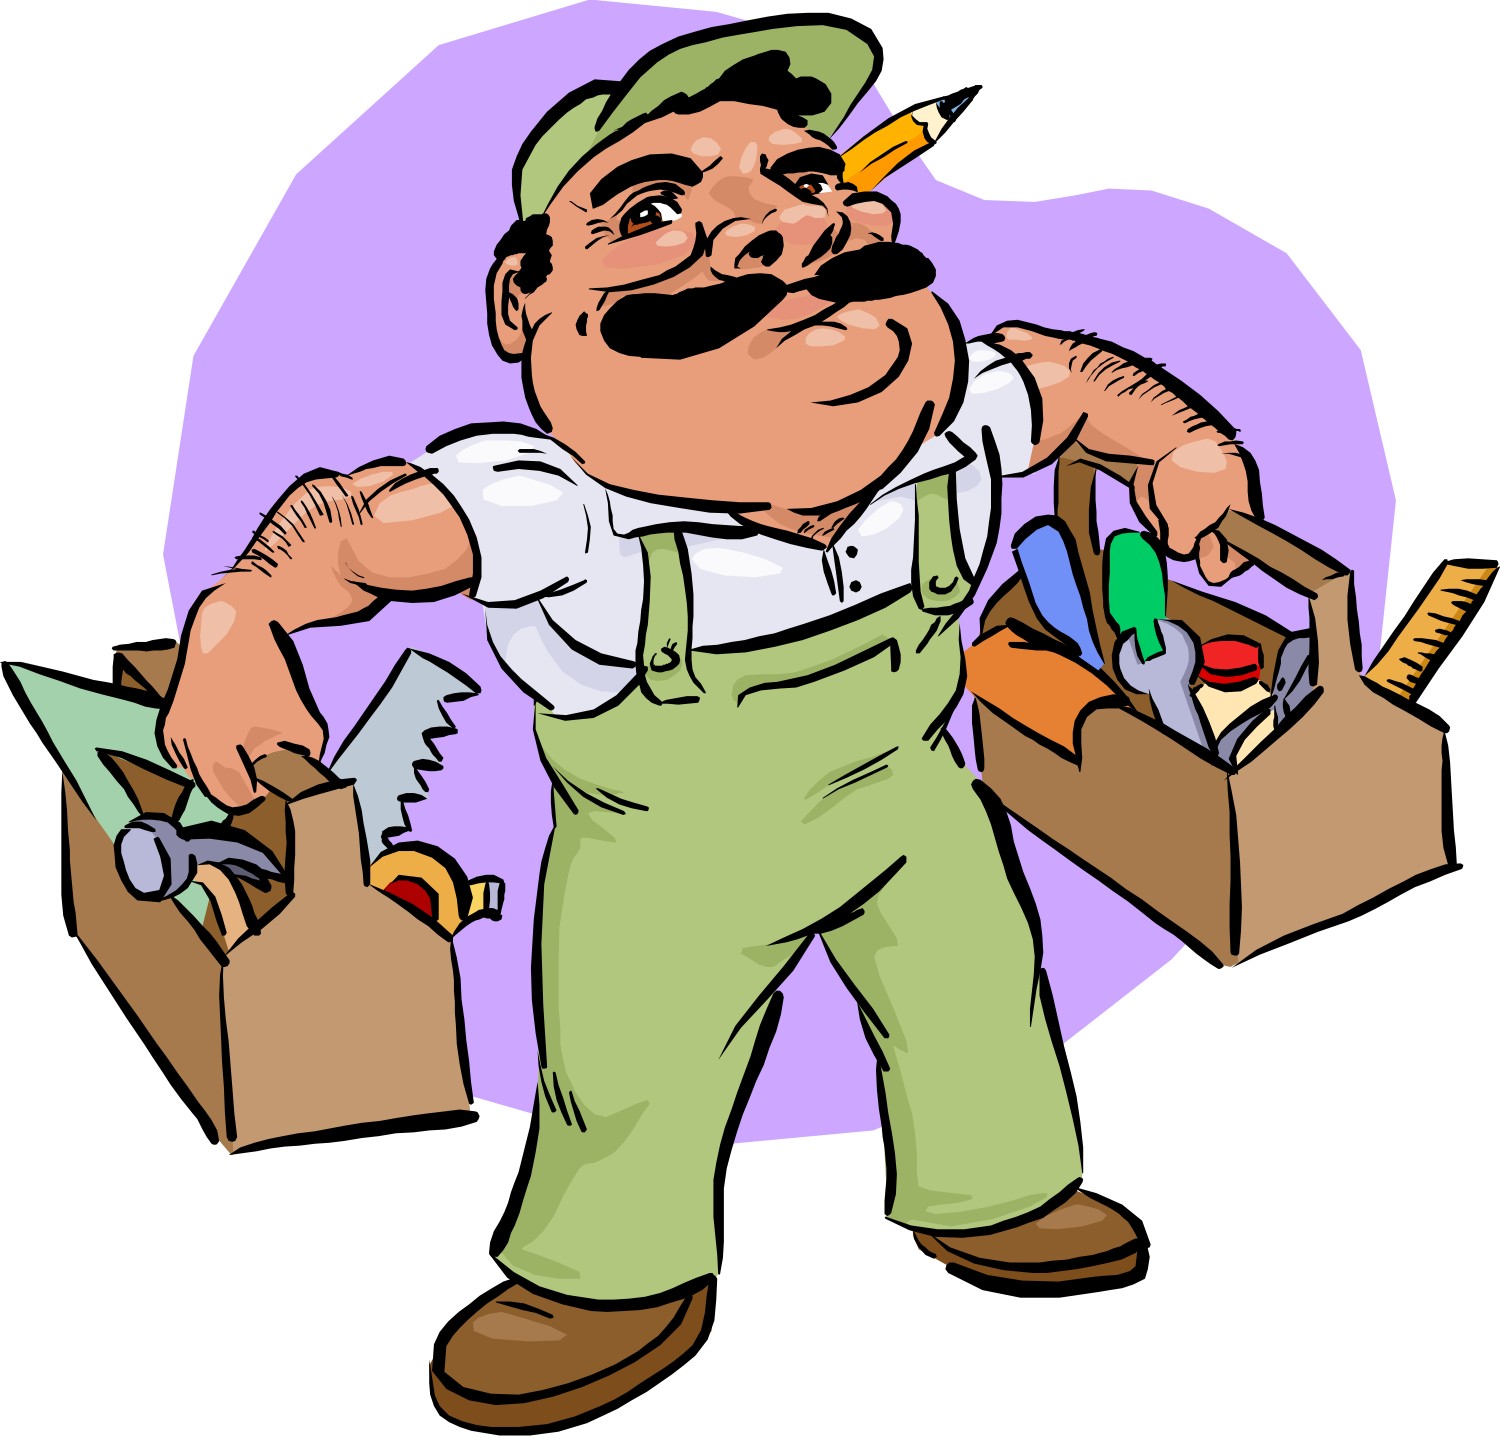 handyman clipart maintenance person